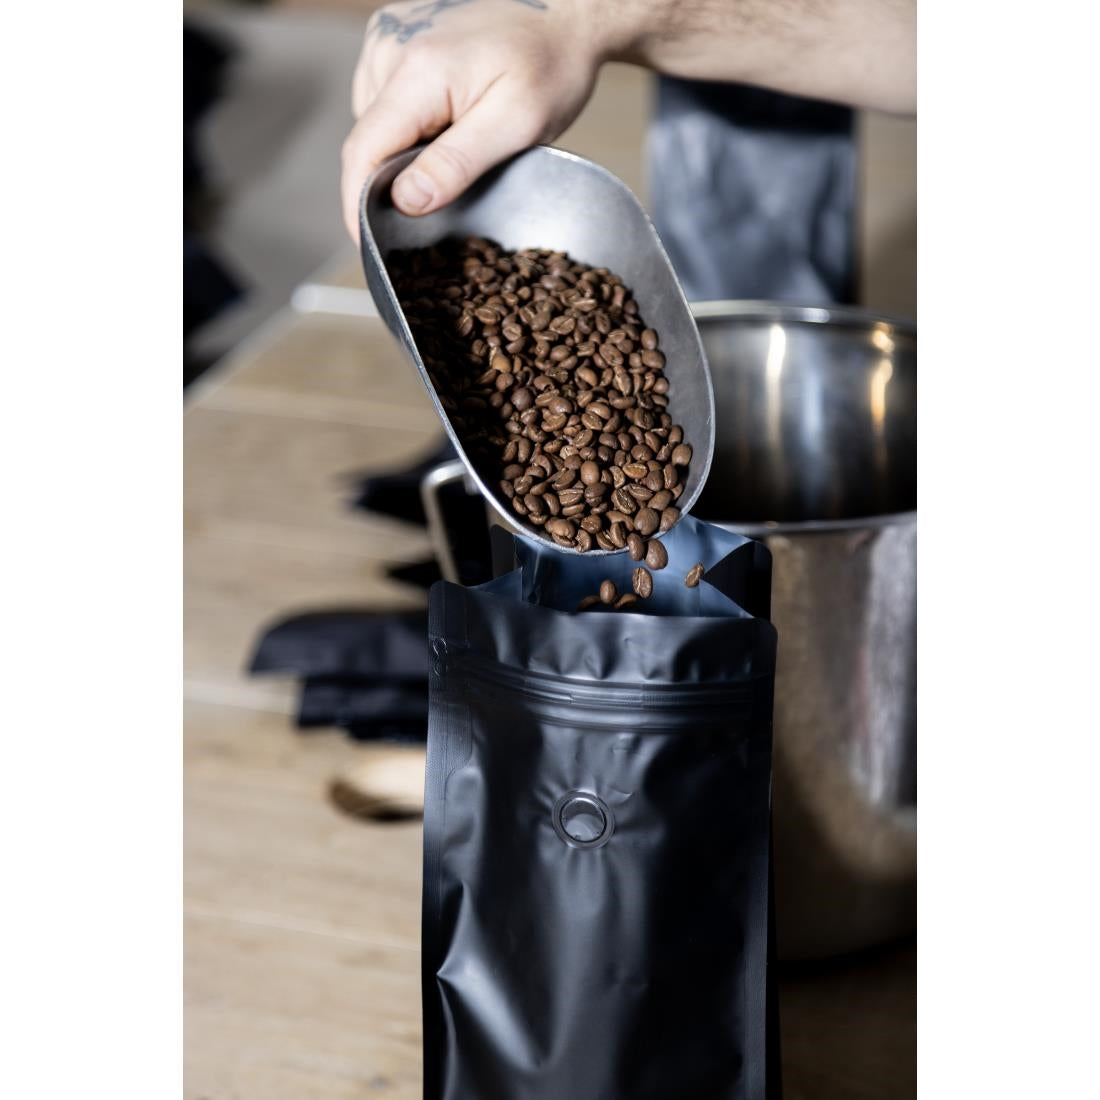 HS525 Beaumont No.1 Classico Coffee Beans 1kg